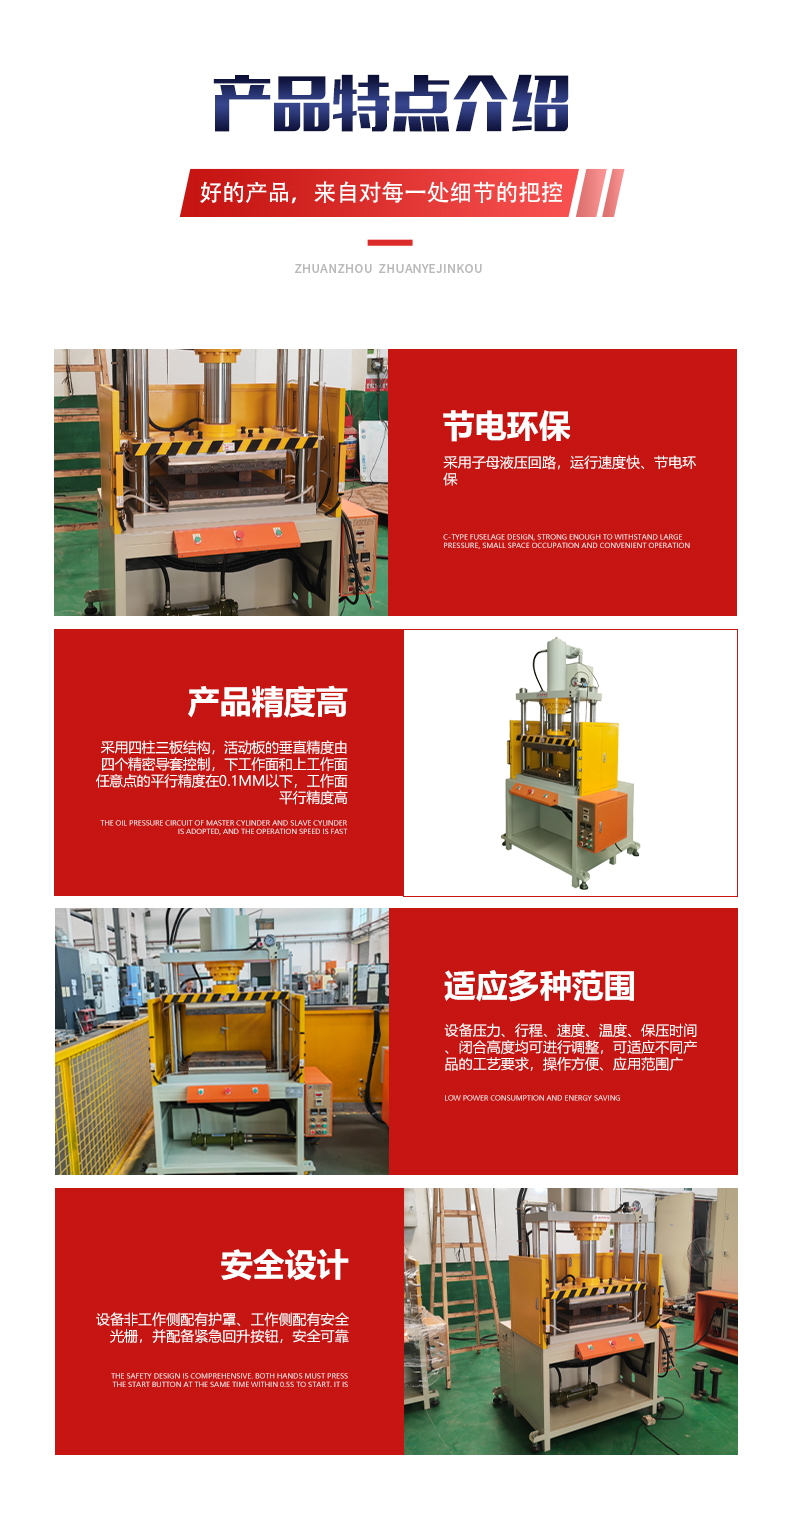 Manufacturer of die-casting hot press shaping machine, heat pipe flattening machine, hot press machine